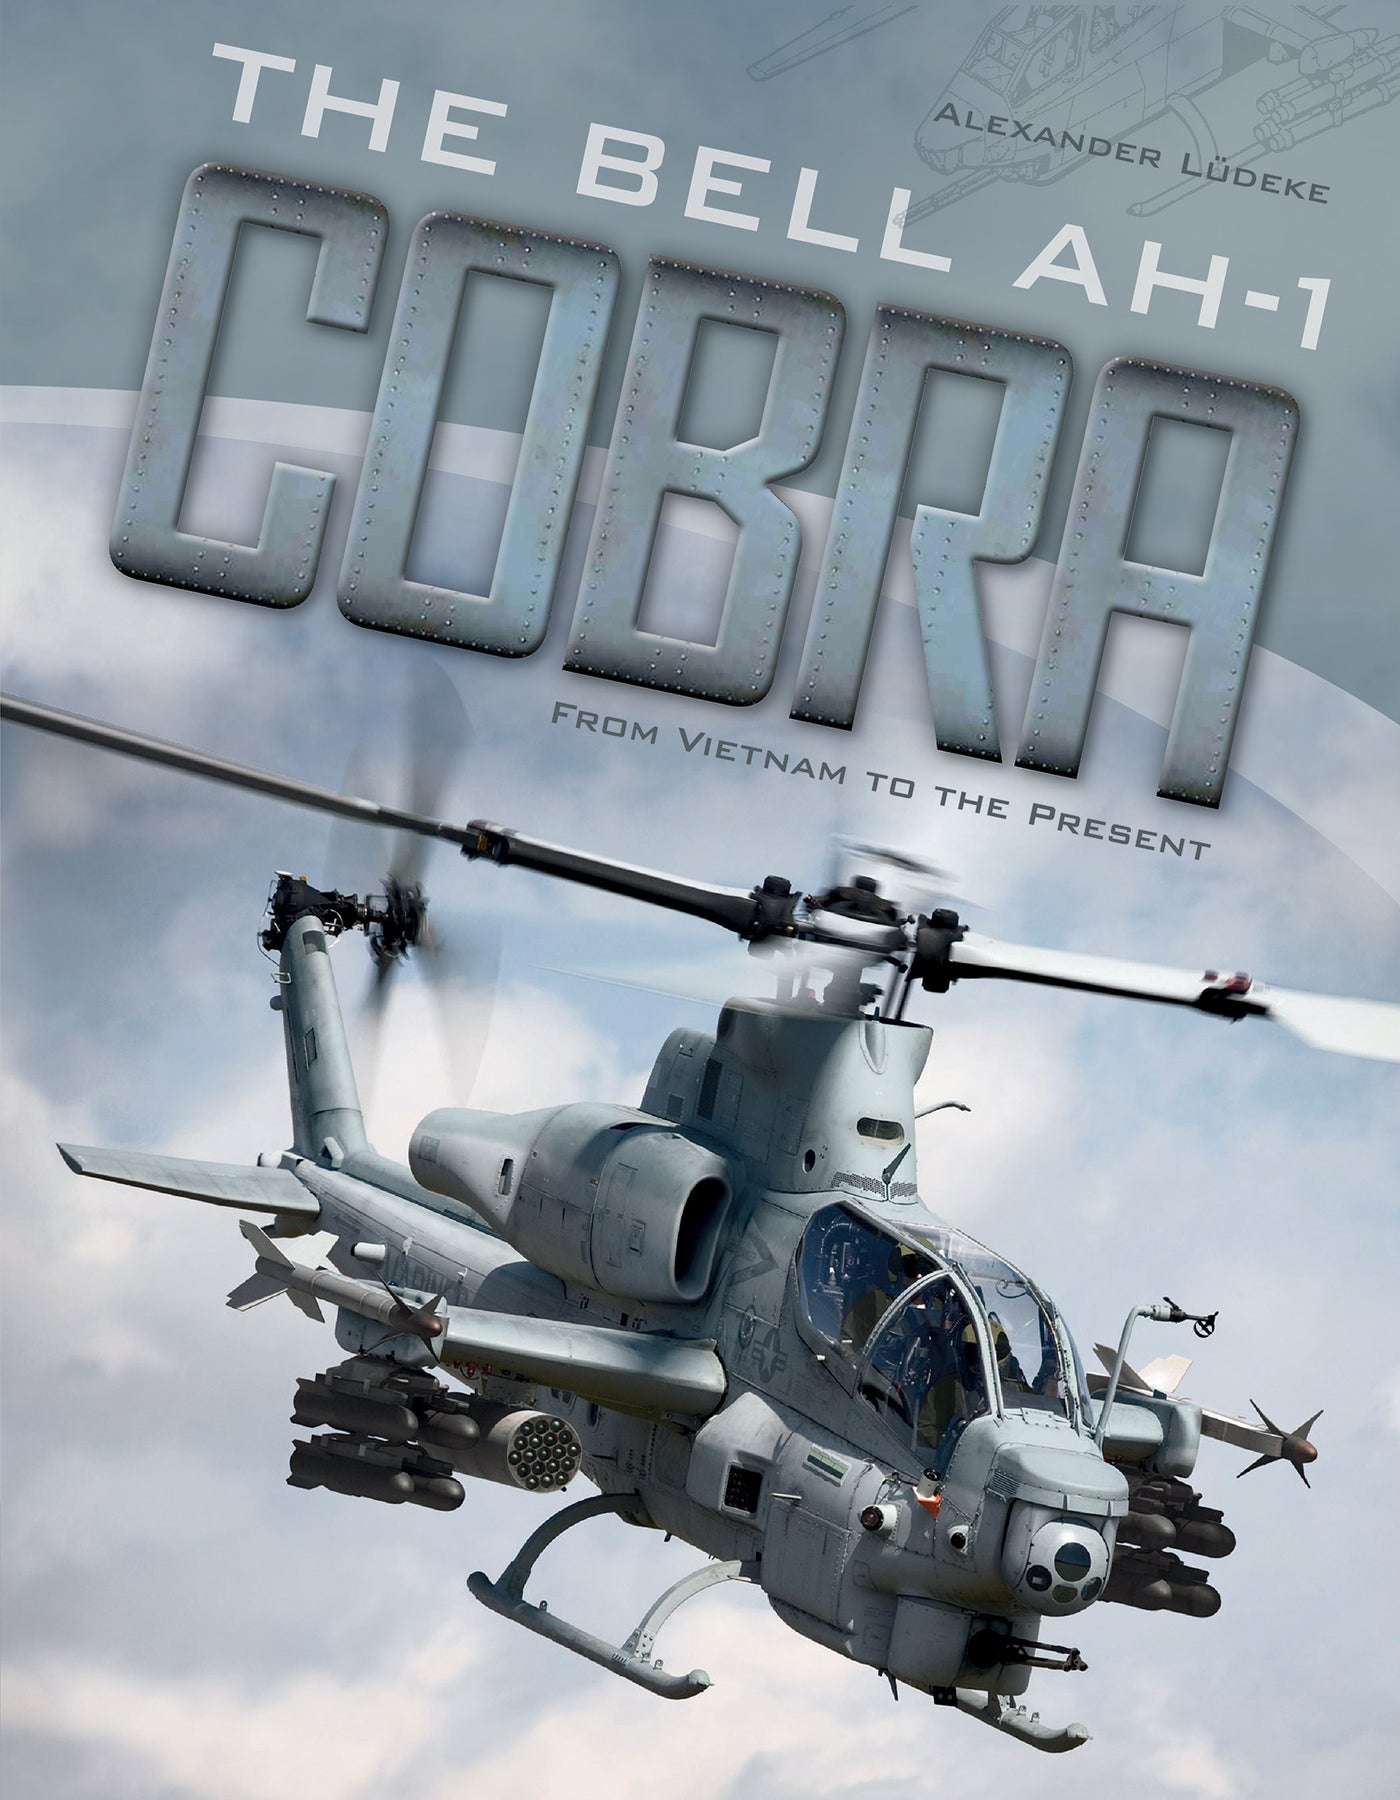 The Bell AH-1 Cobra